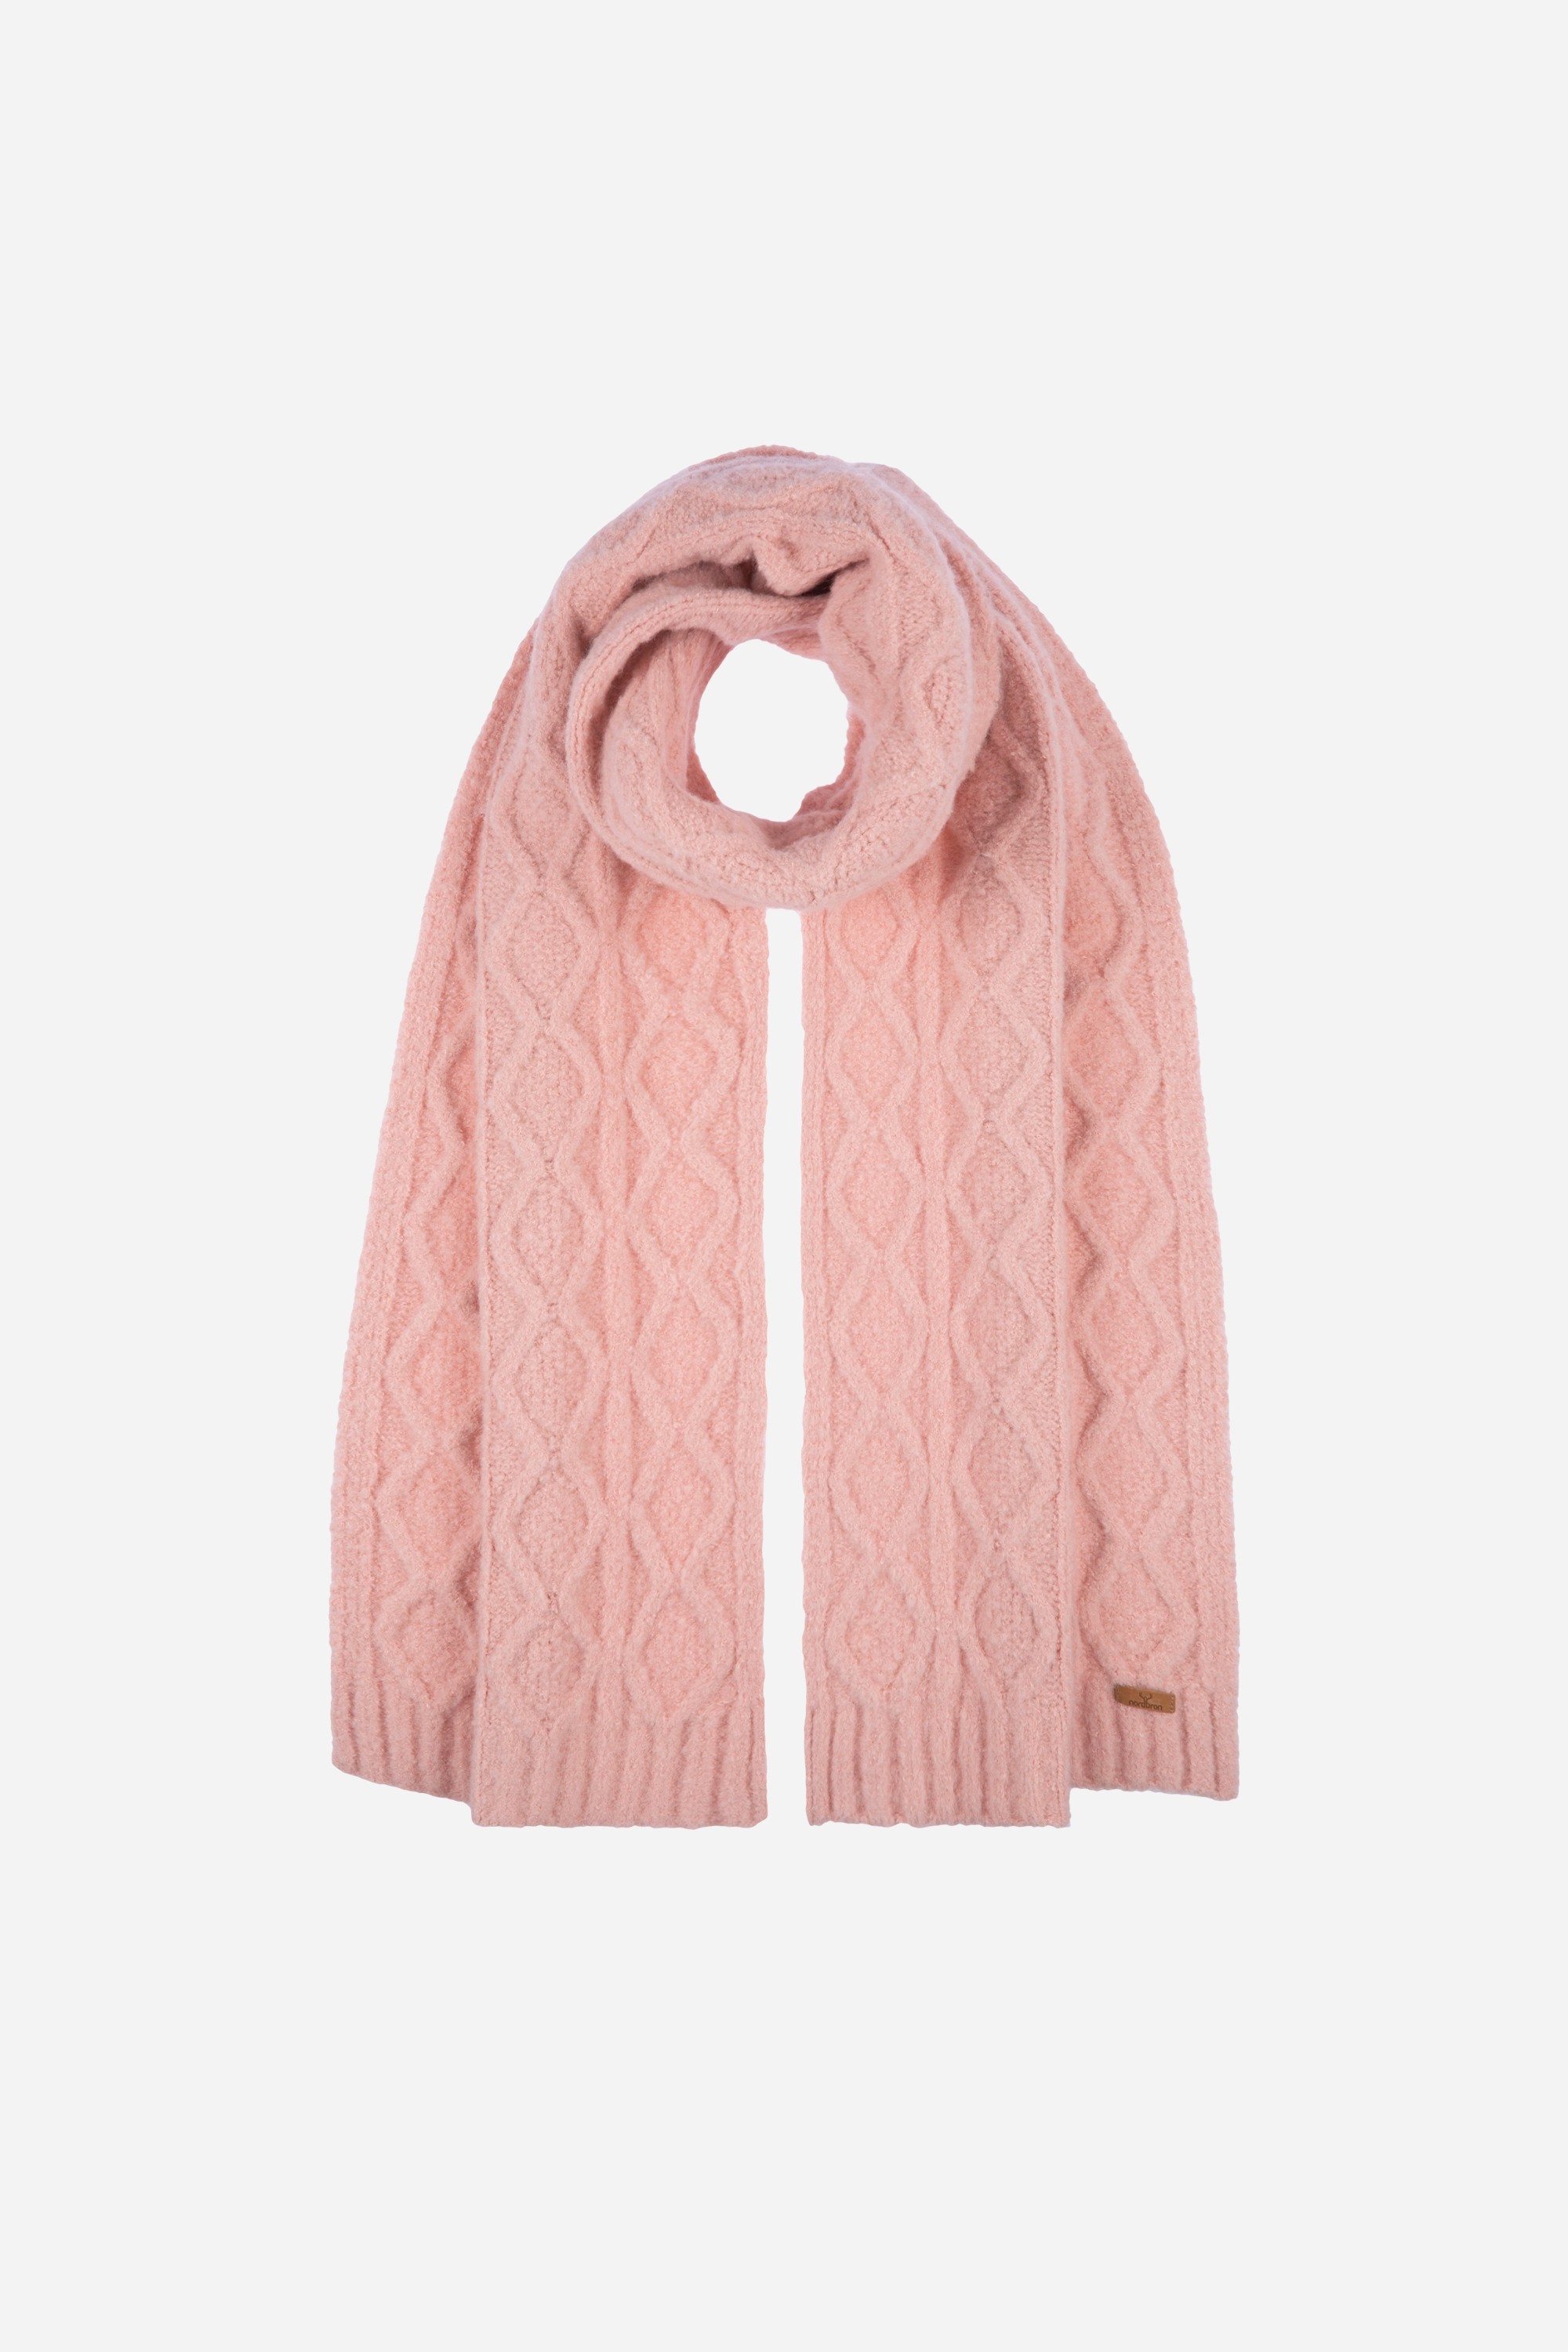 Nolly Patterned Wool Nordbron Women Scarf - Pink